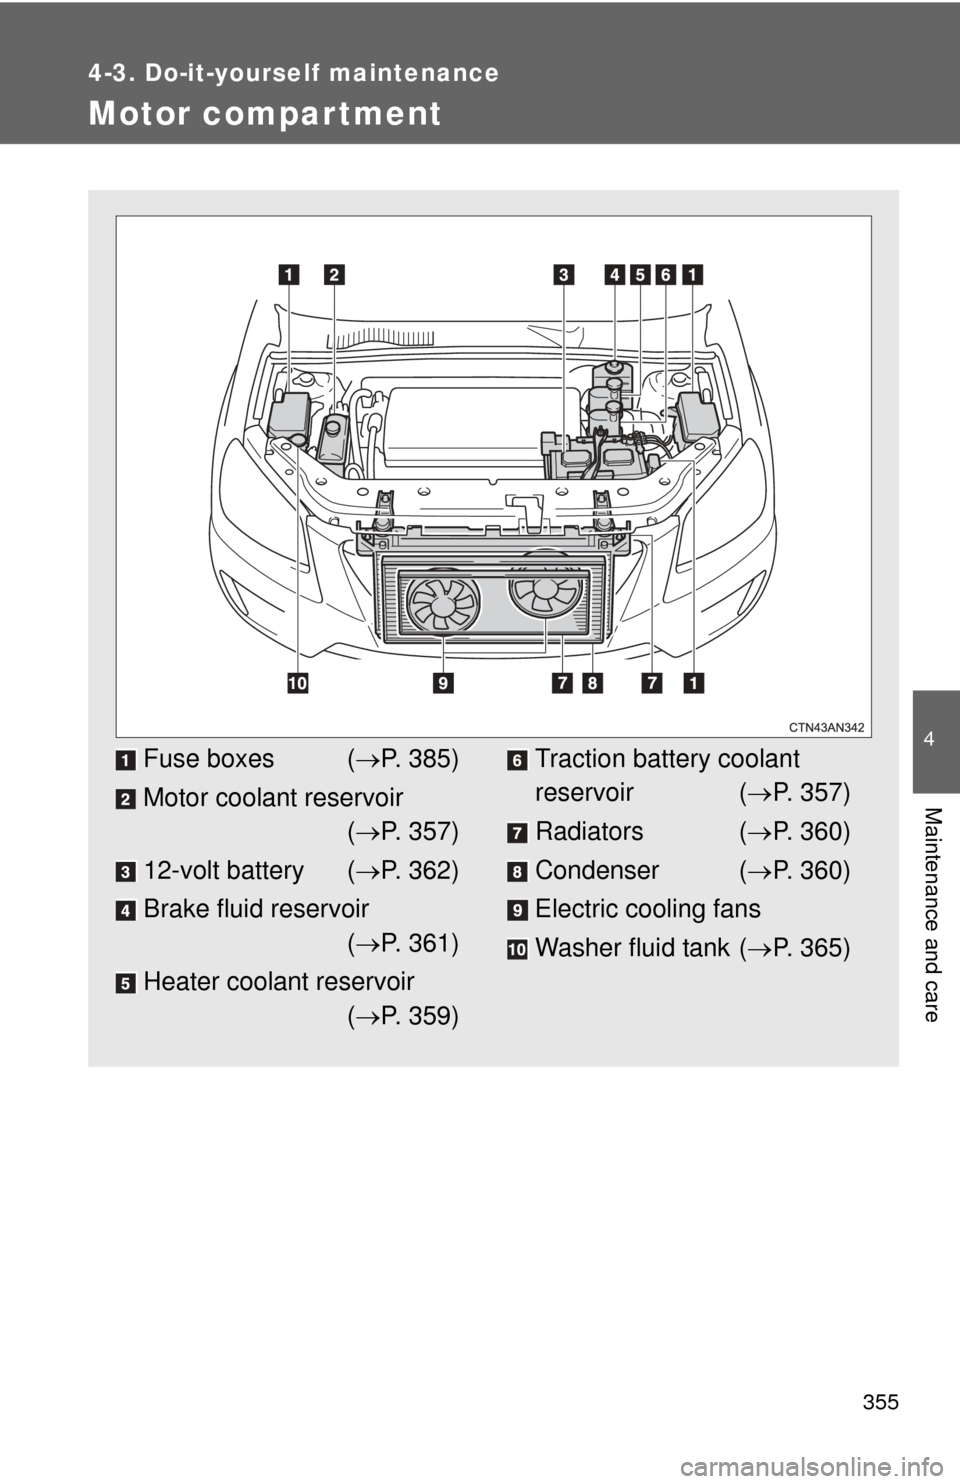 TOYOTA RAV4 EV 2012 1.G Owners Manual 355
4-3. Do-it-yourself maintenance
4
Maintenance and care
Motor compartment
Fuse boxes (P. 385)
Motor coolant reservoir ( P. 357)
12-volt battery ( P. 362)
Brake fluid reservoir ( P. 361)